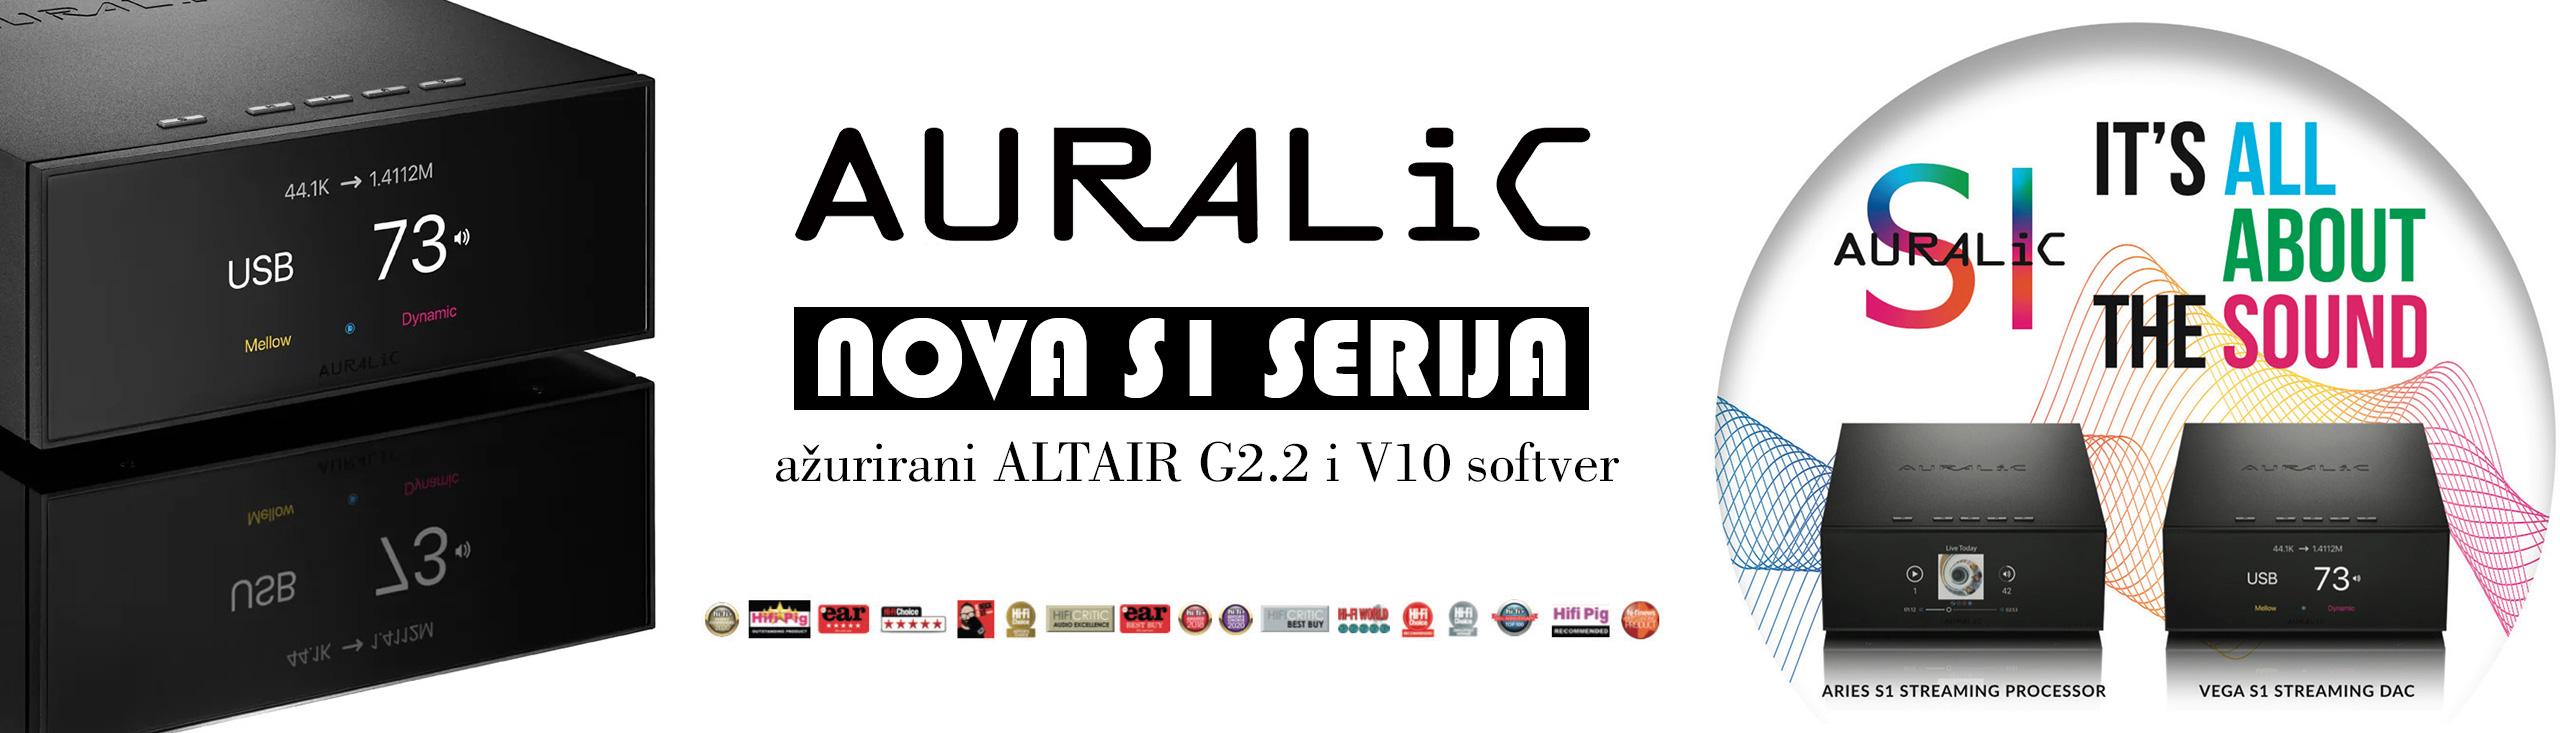 Auralic S1 serija